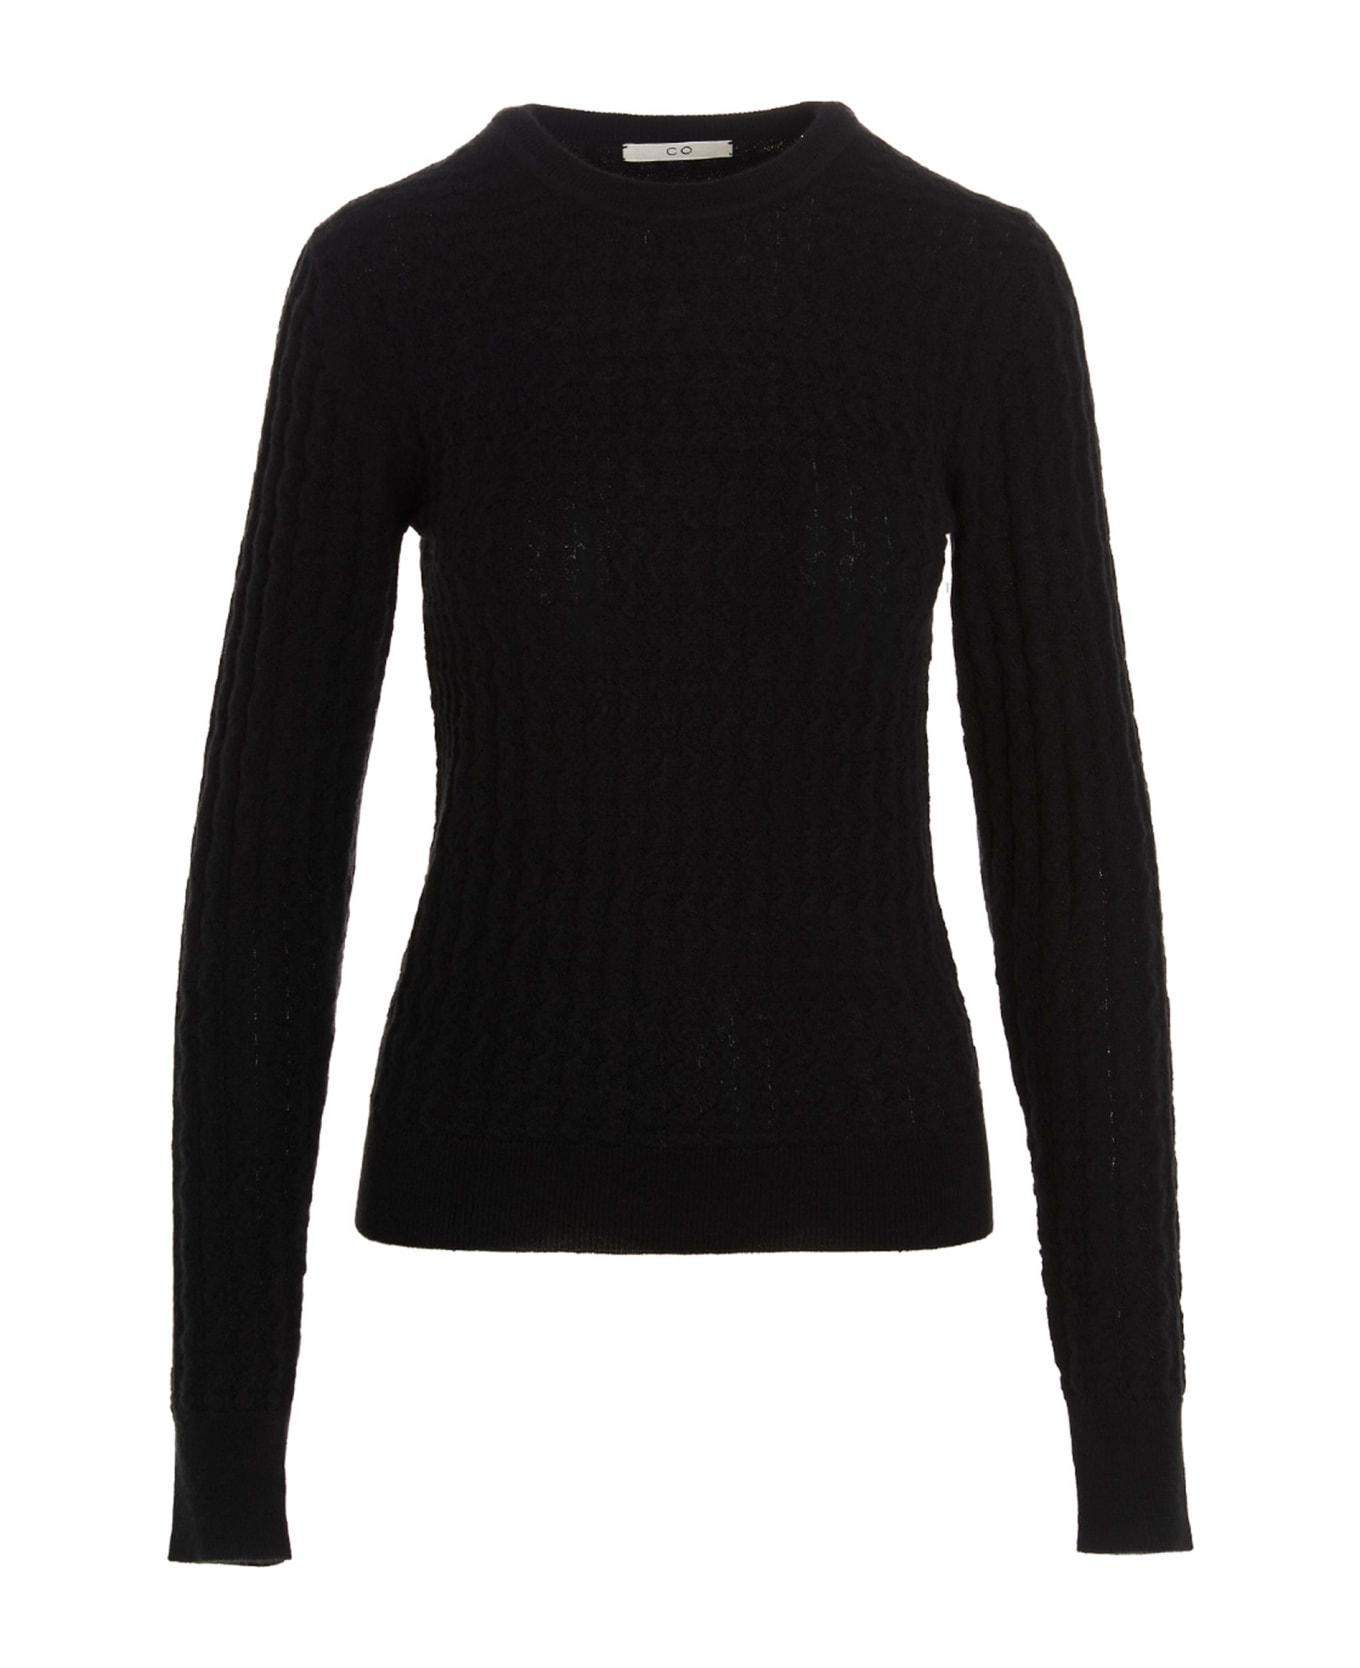 Co Worked Sweater - Black   ニットウェア